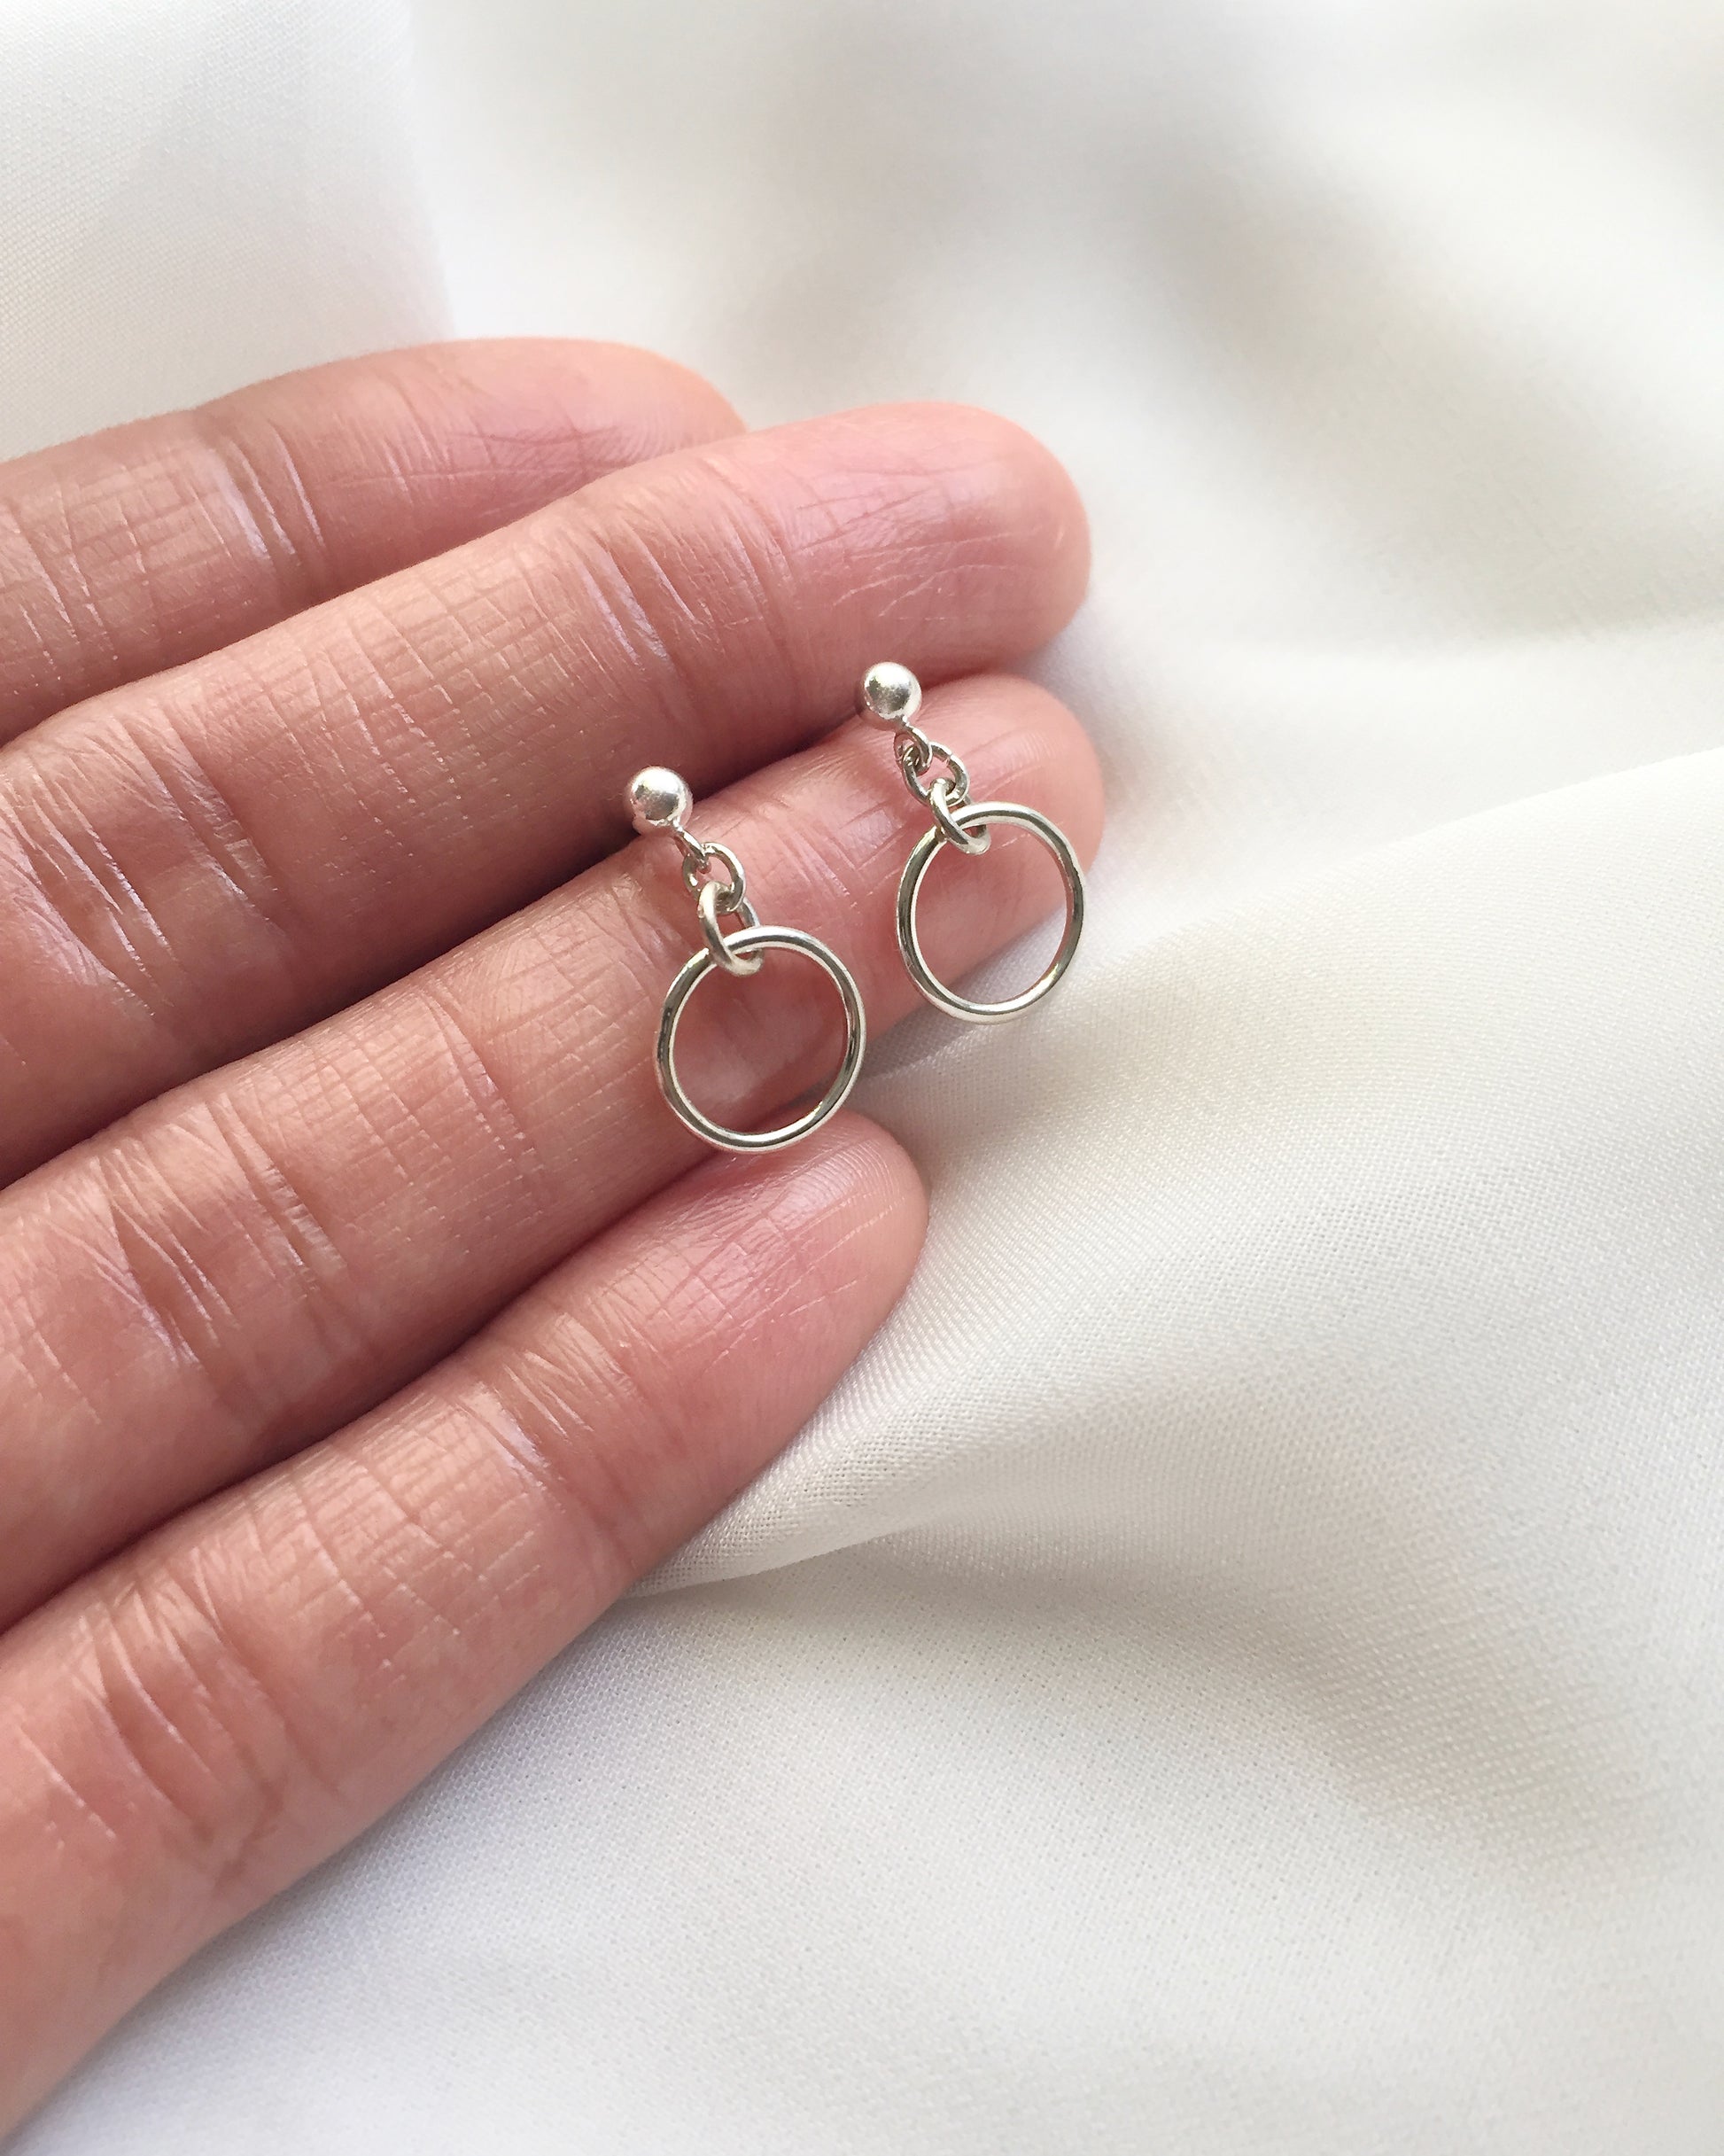 Delicate Drop Earrings in Sterling Silver or Gold Filled | Mini Open Circle Earrings | IB Jewelry